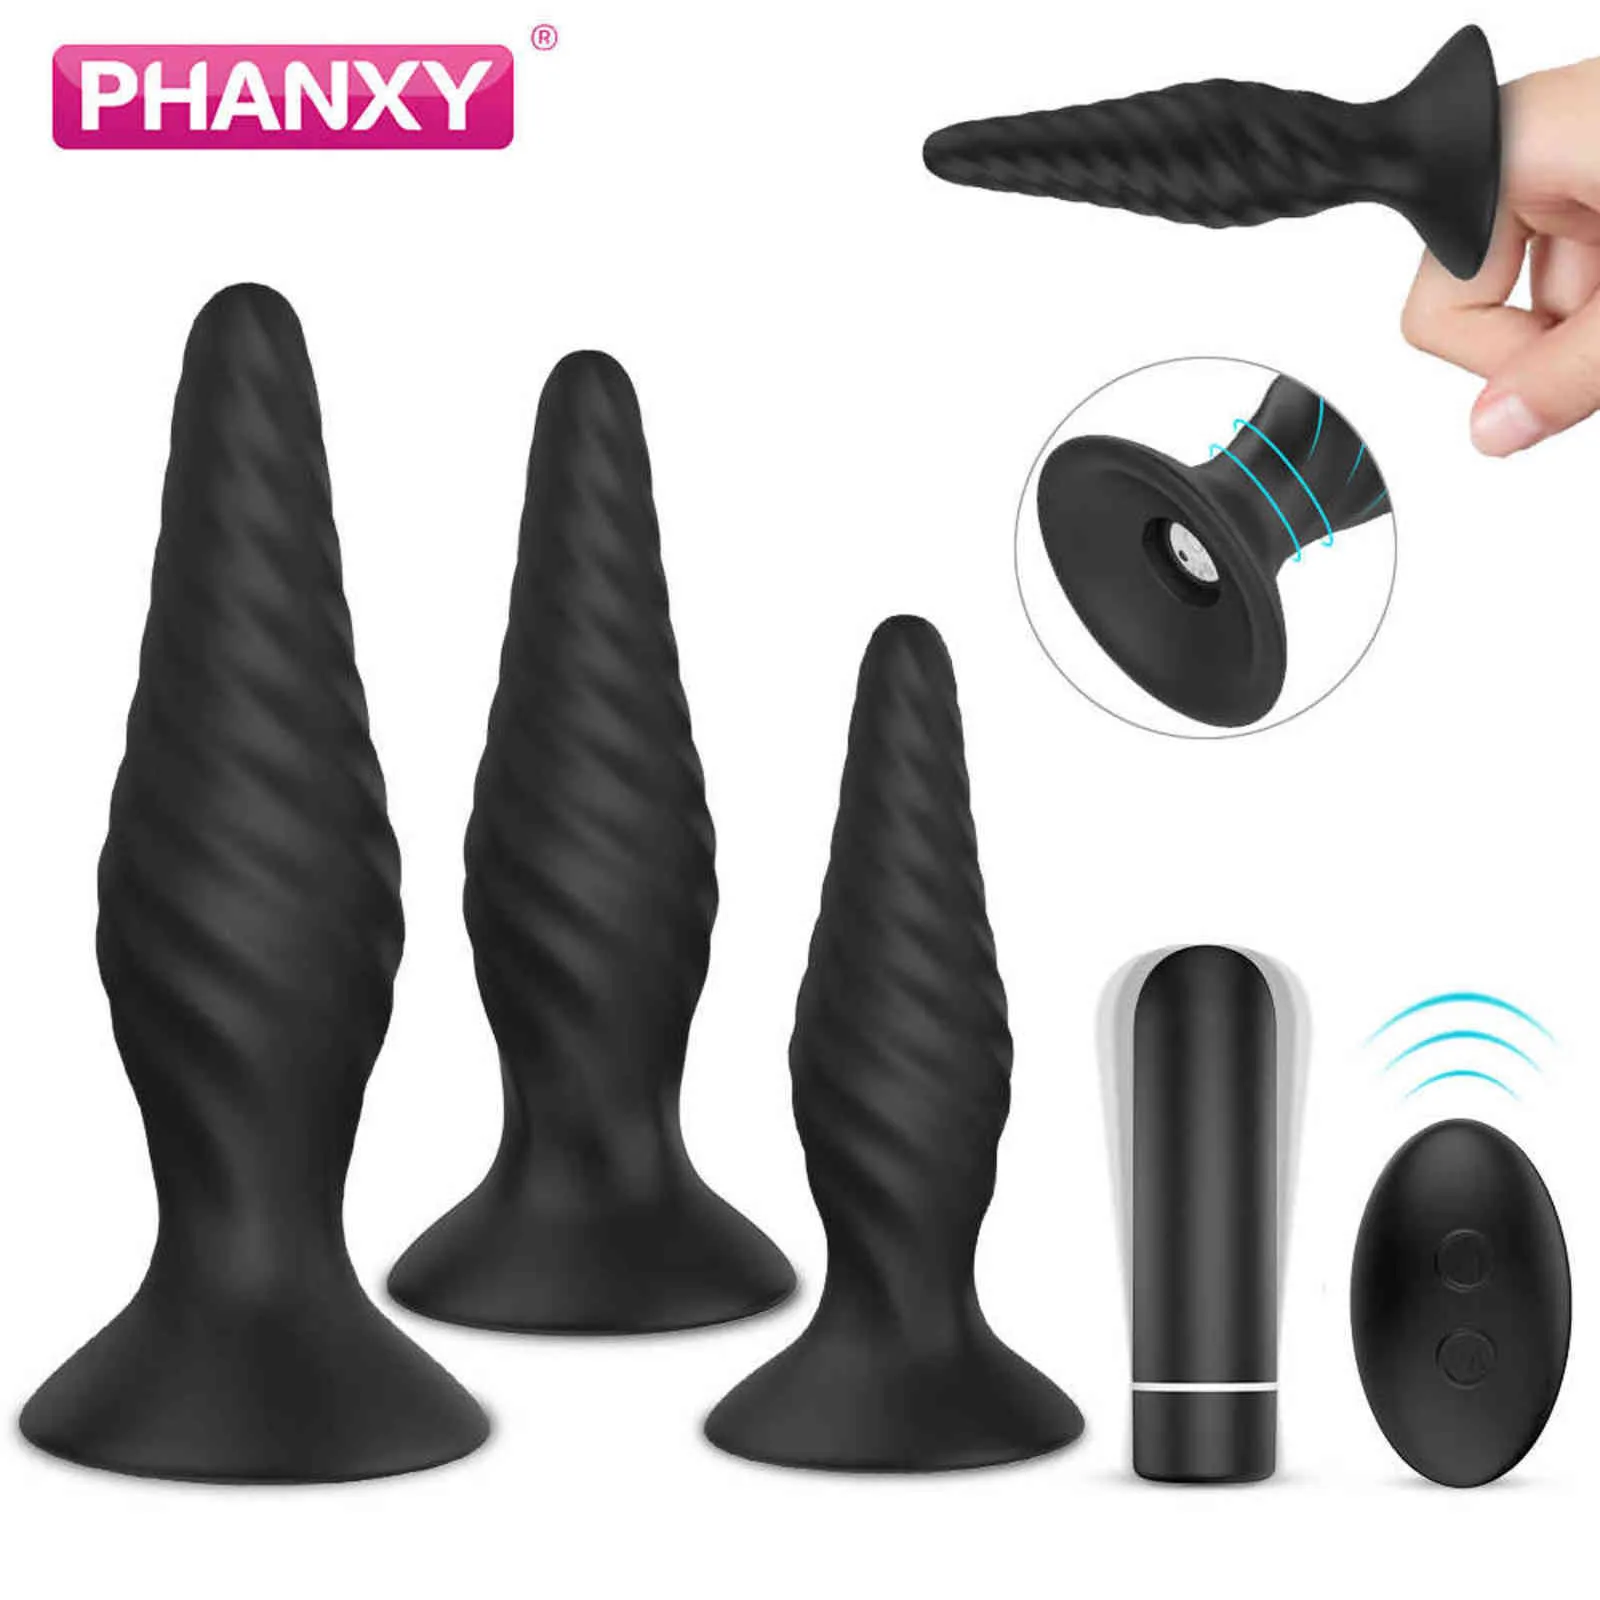 NXY 섹스 아날 장난감 Phanxy 엉덩이 플러그 세트 확장기 튜브 큰 거대한 장난감 진동기 진동 엉덩이 게이 코르크 실리콘 남자 여성용 제품 1201